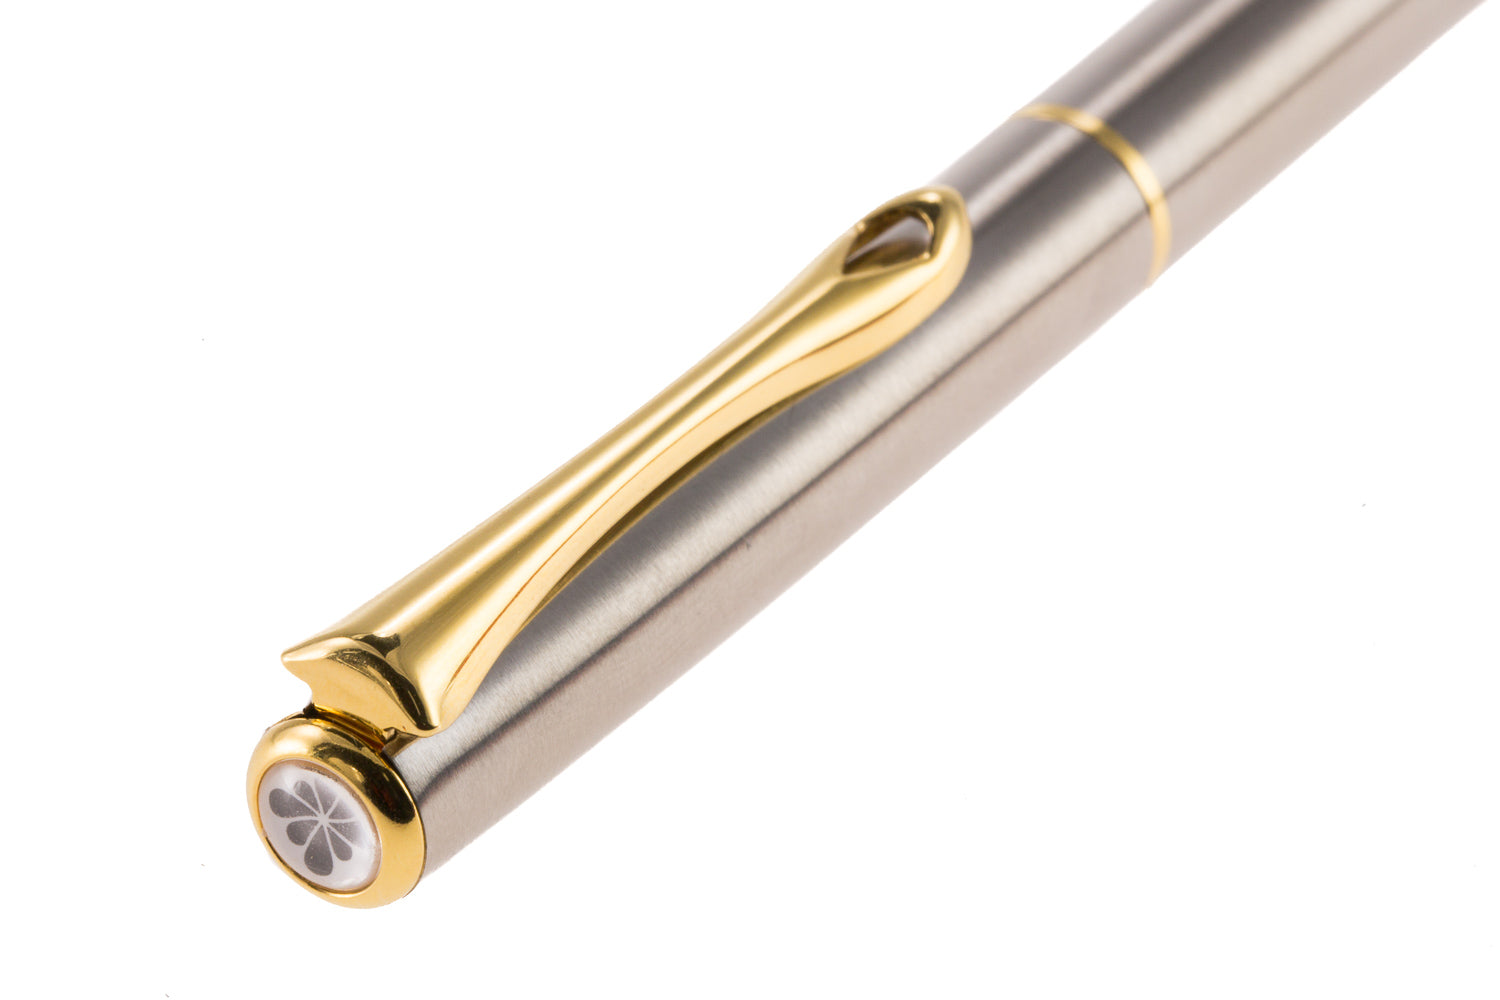 Diplomat Traveller Fountain Pen - Steel Gold - The Goulet Pen Company